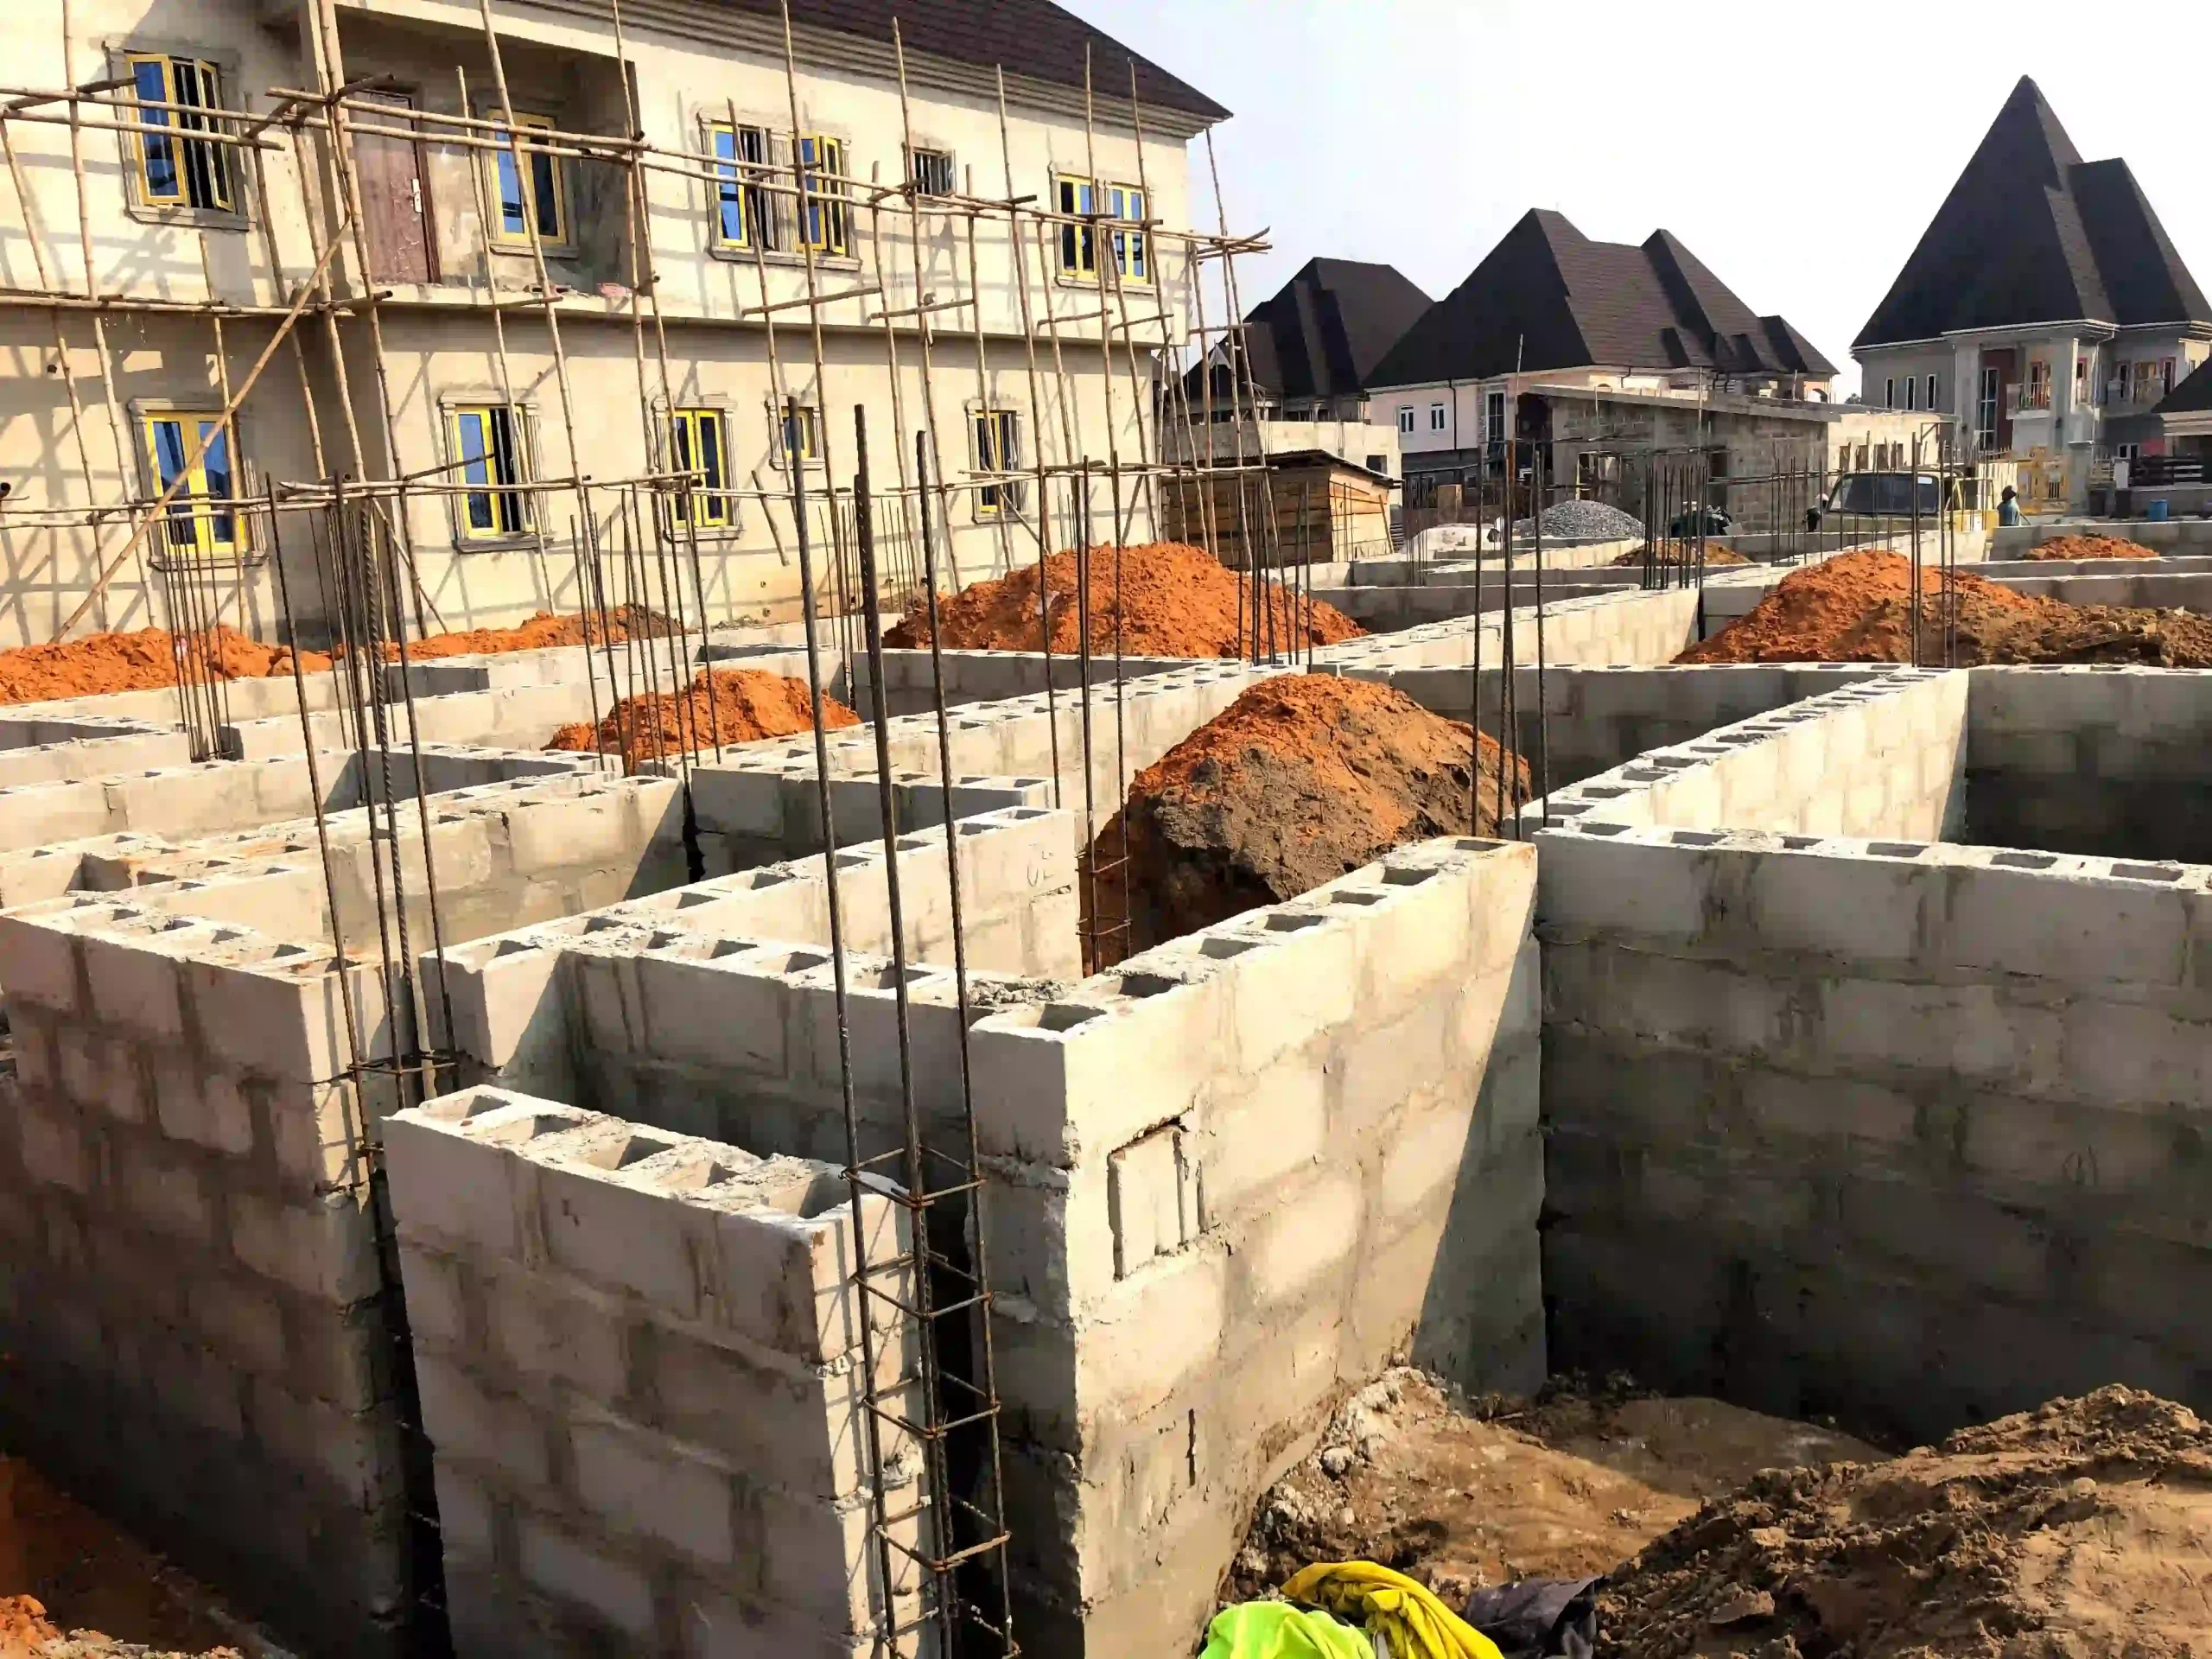 4 Bedroom duplex house plans in Nigeria